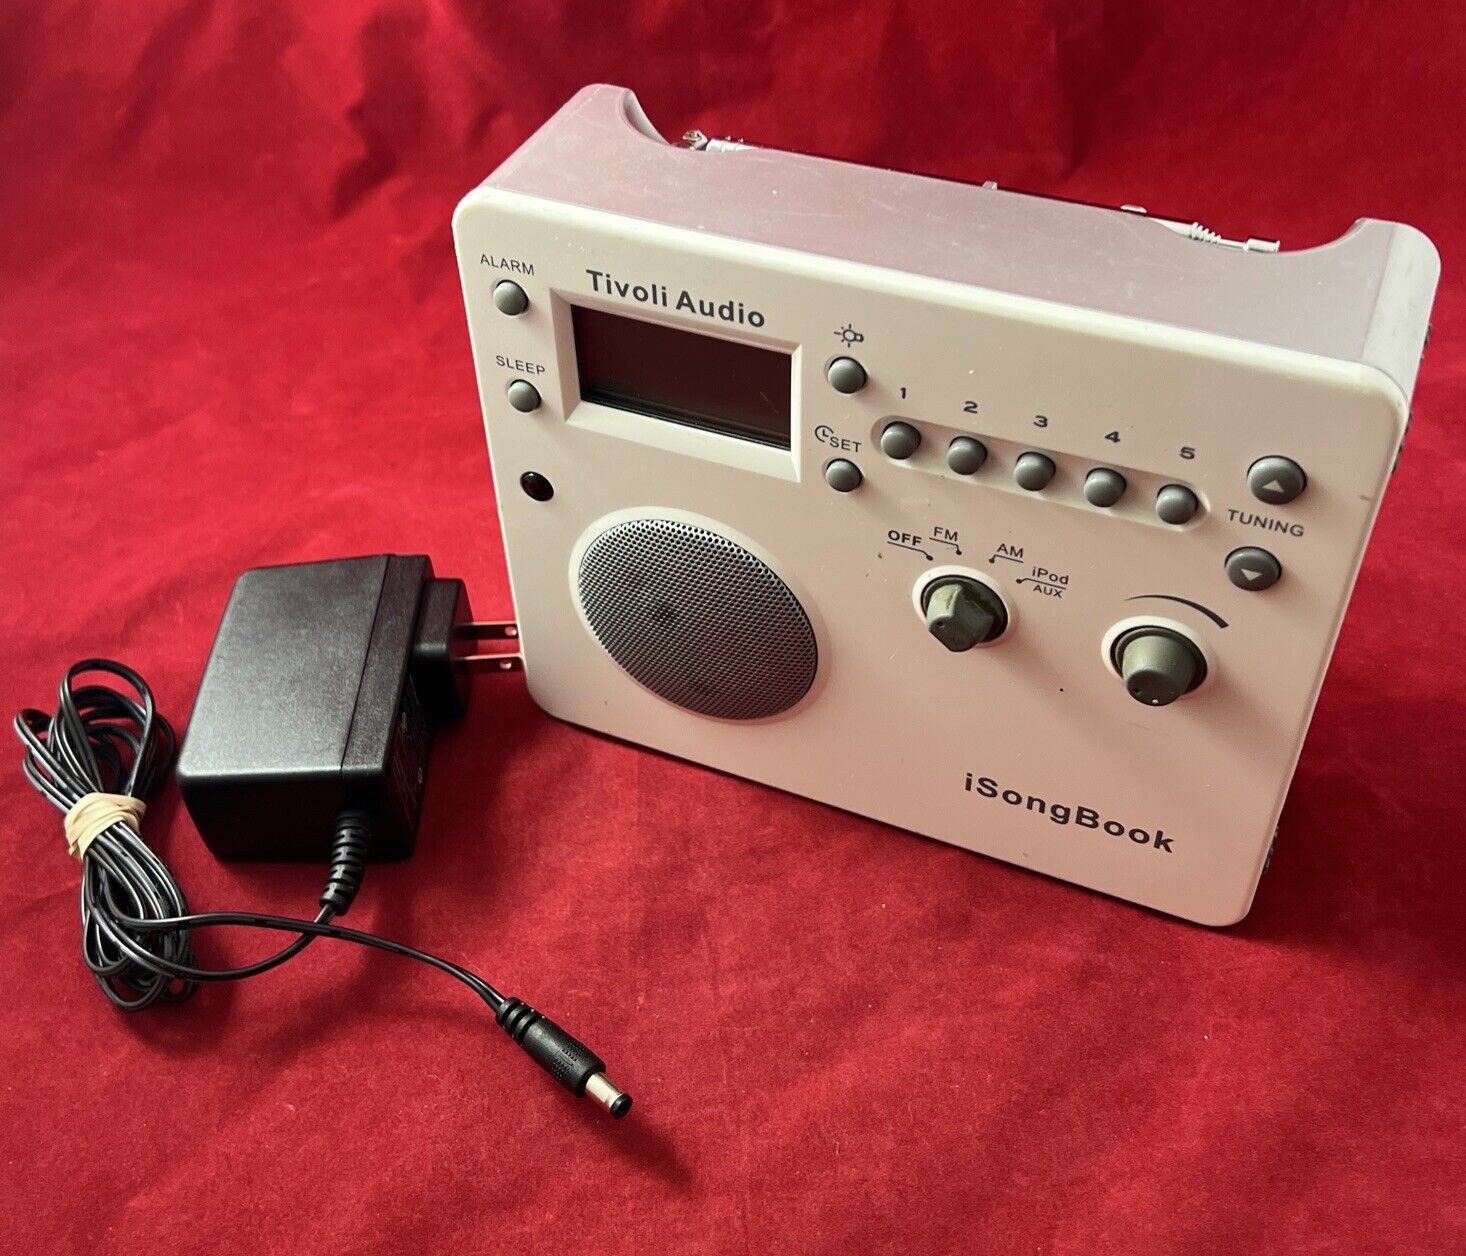 VTG Tivoli Audio iSongBook Alarm Clock Radio Power Adapter for iPod WORKS